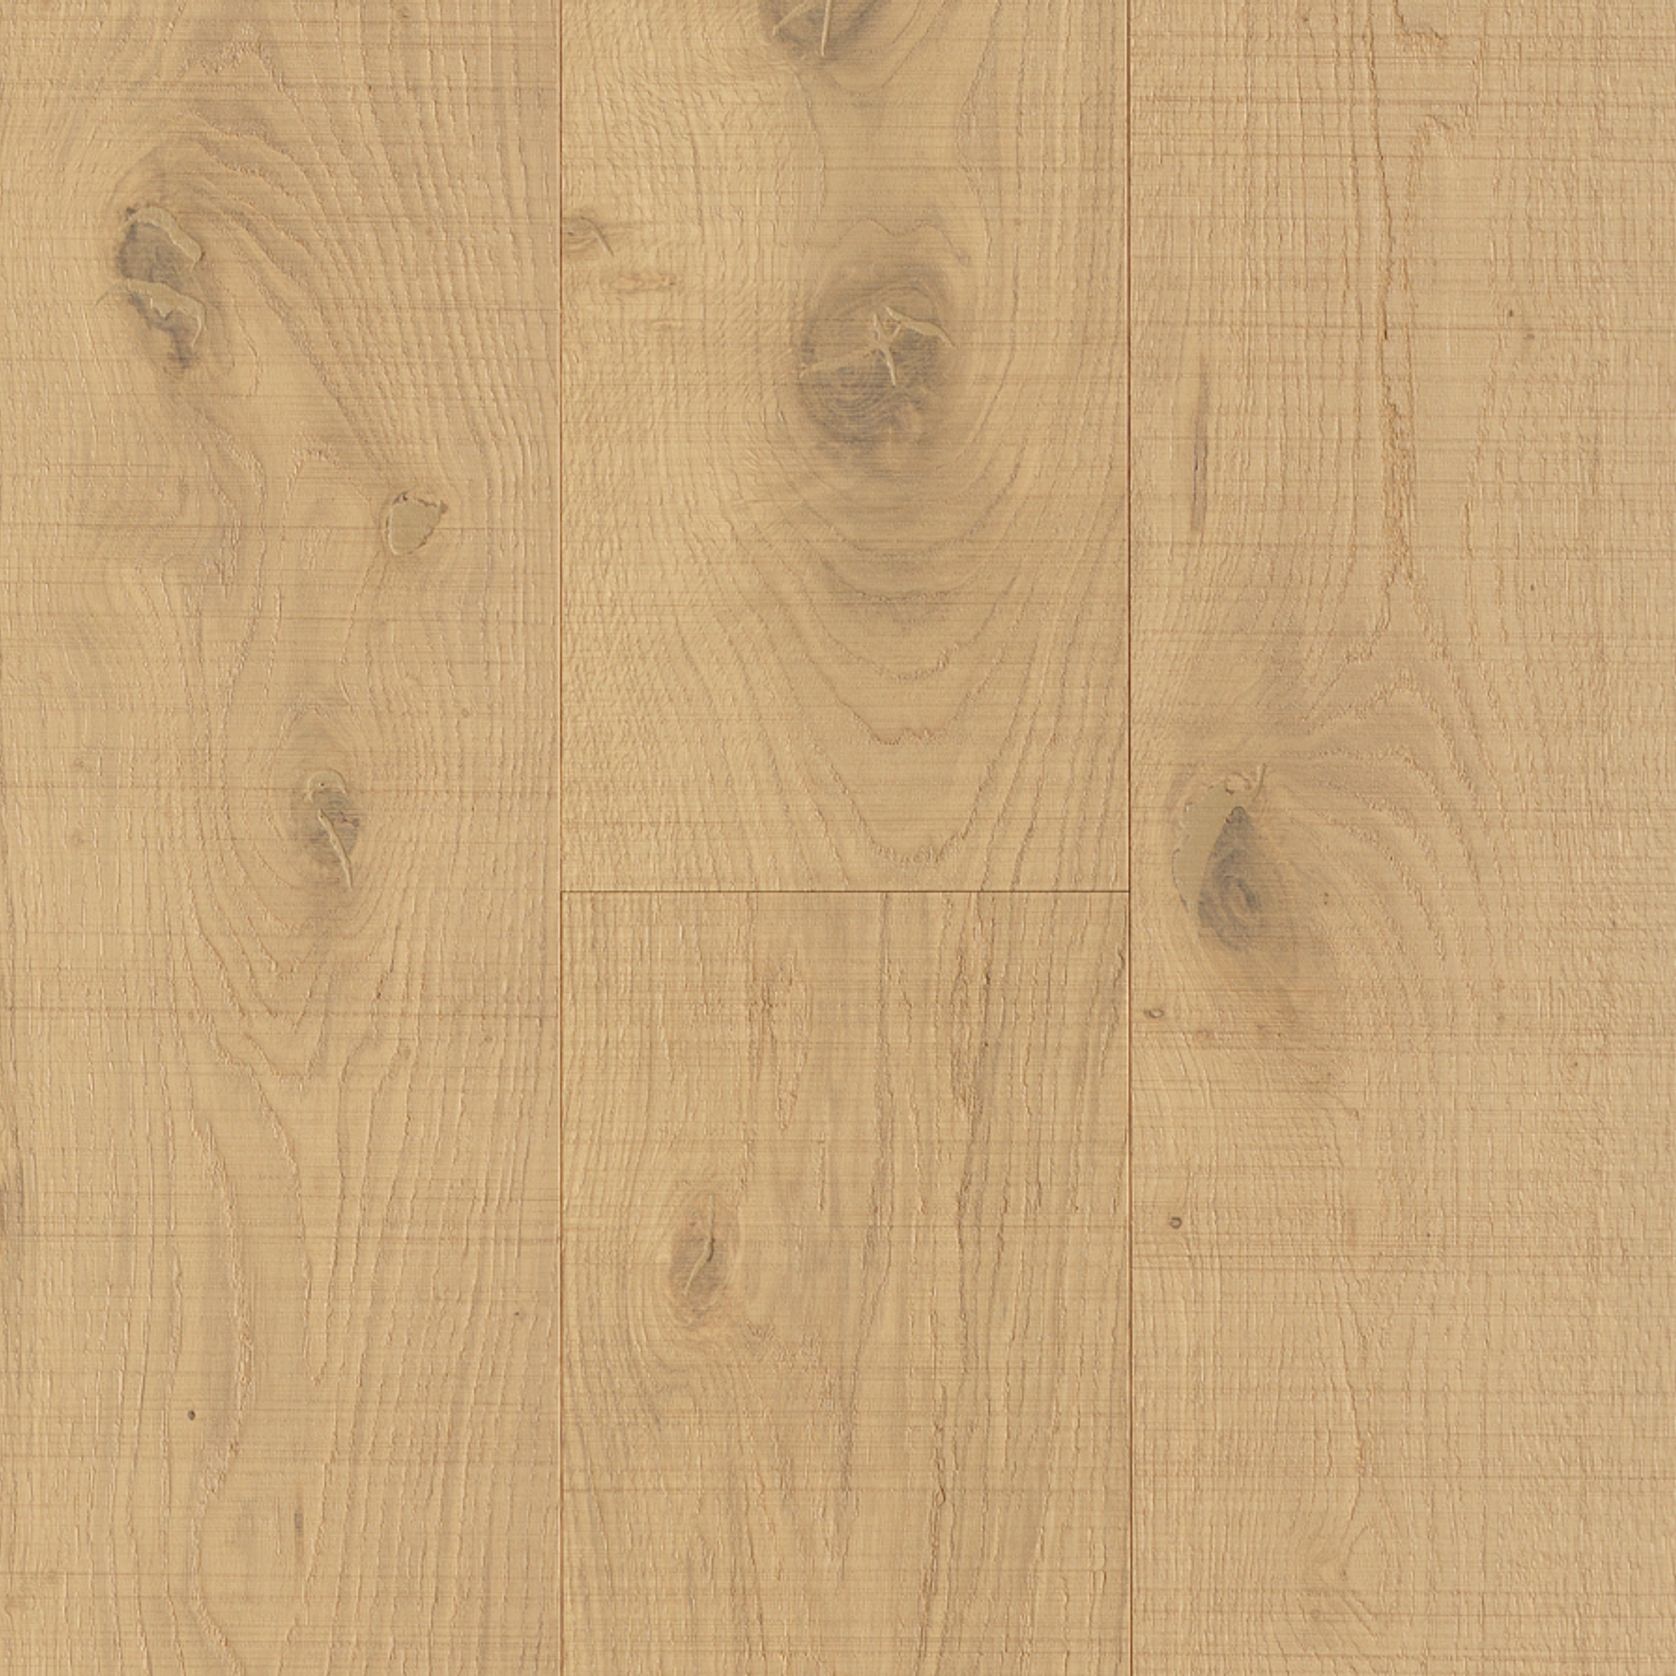 Sandstone Rustico VidaPlank Timber Flooring gallery detail image